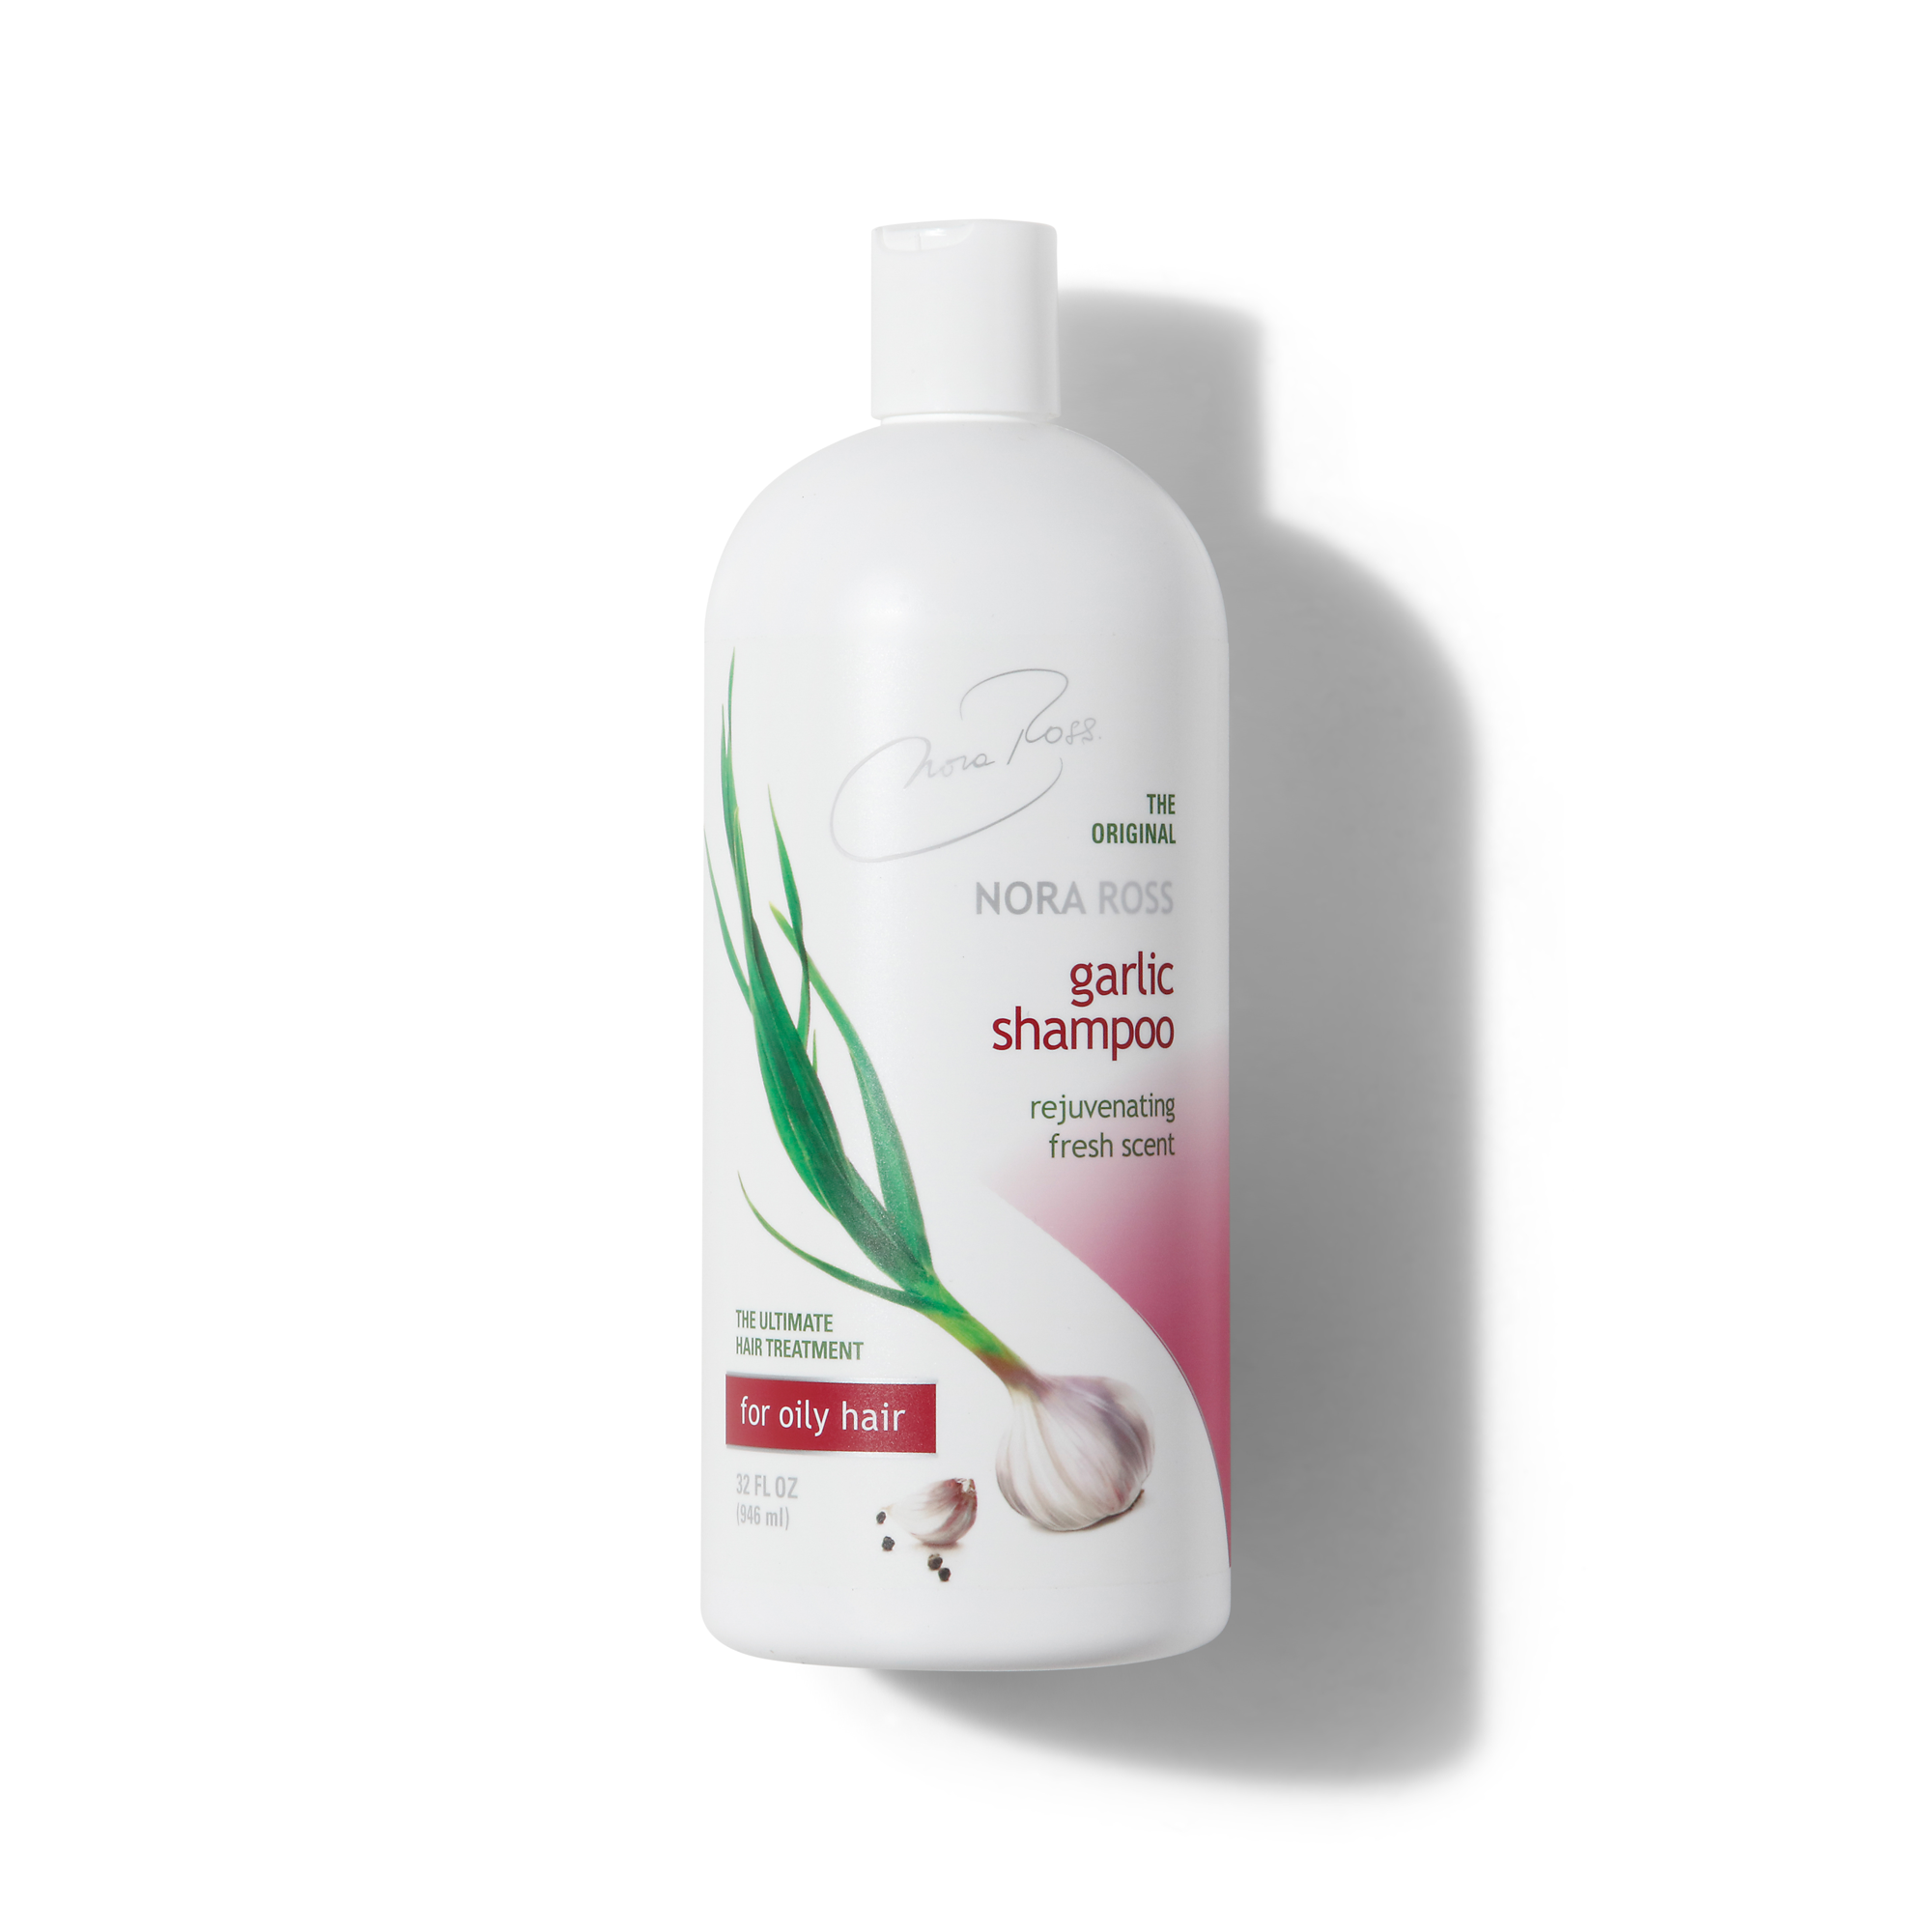 Classic Garlic Extract Shampoo for Oily Hair 32 Oz. - Hair Growth & Thickening Formula